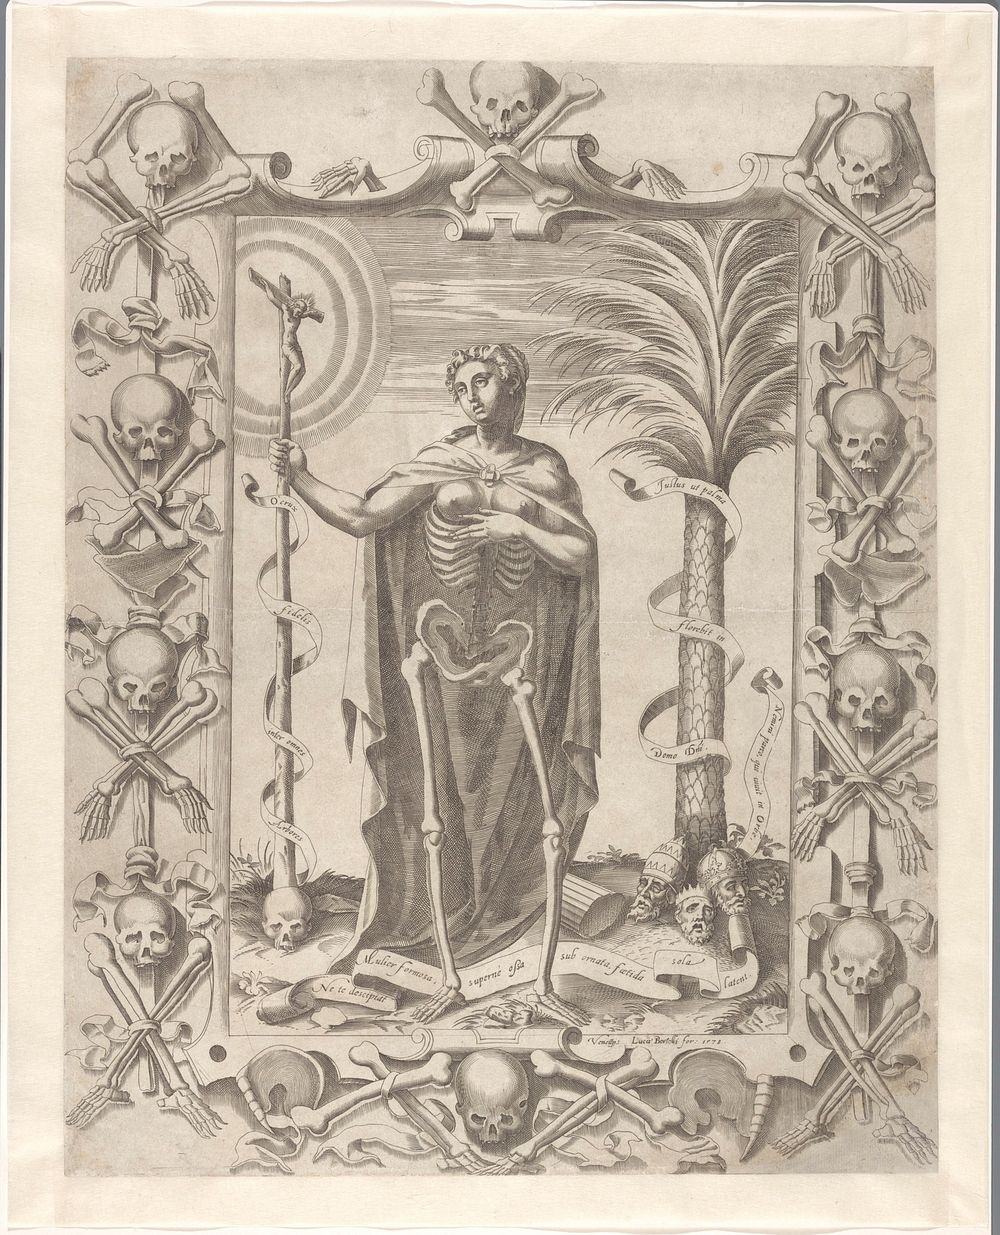 Vanitas (1578) by Luca Bertelli